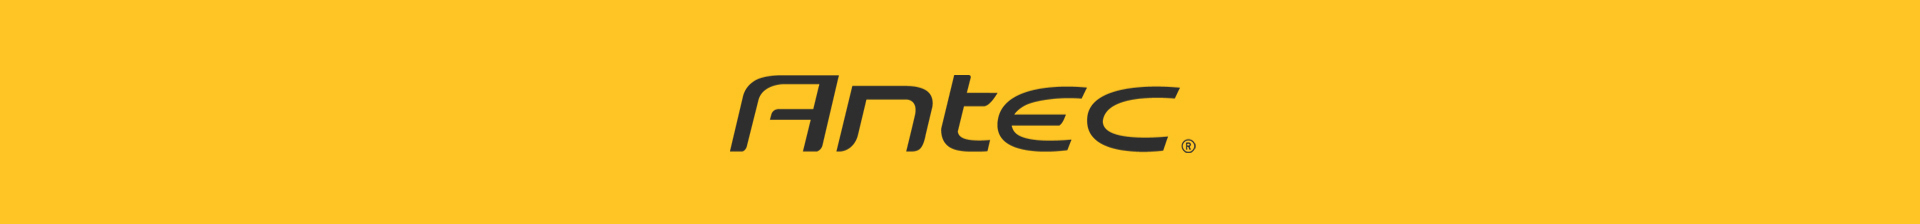 Antec Logo Bar